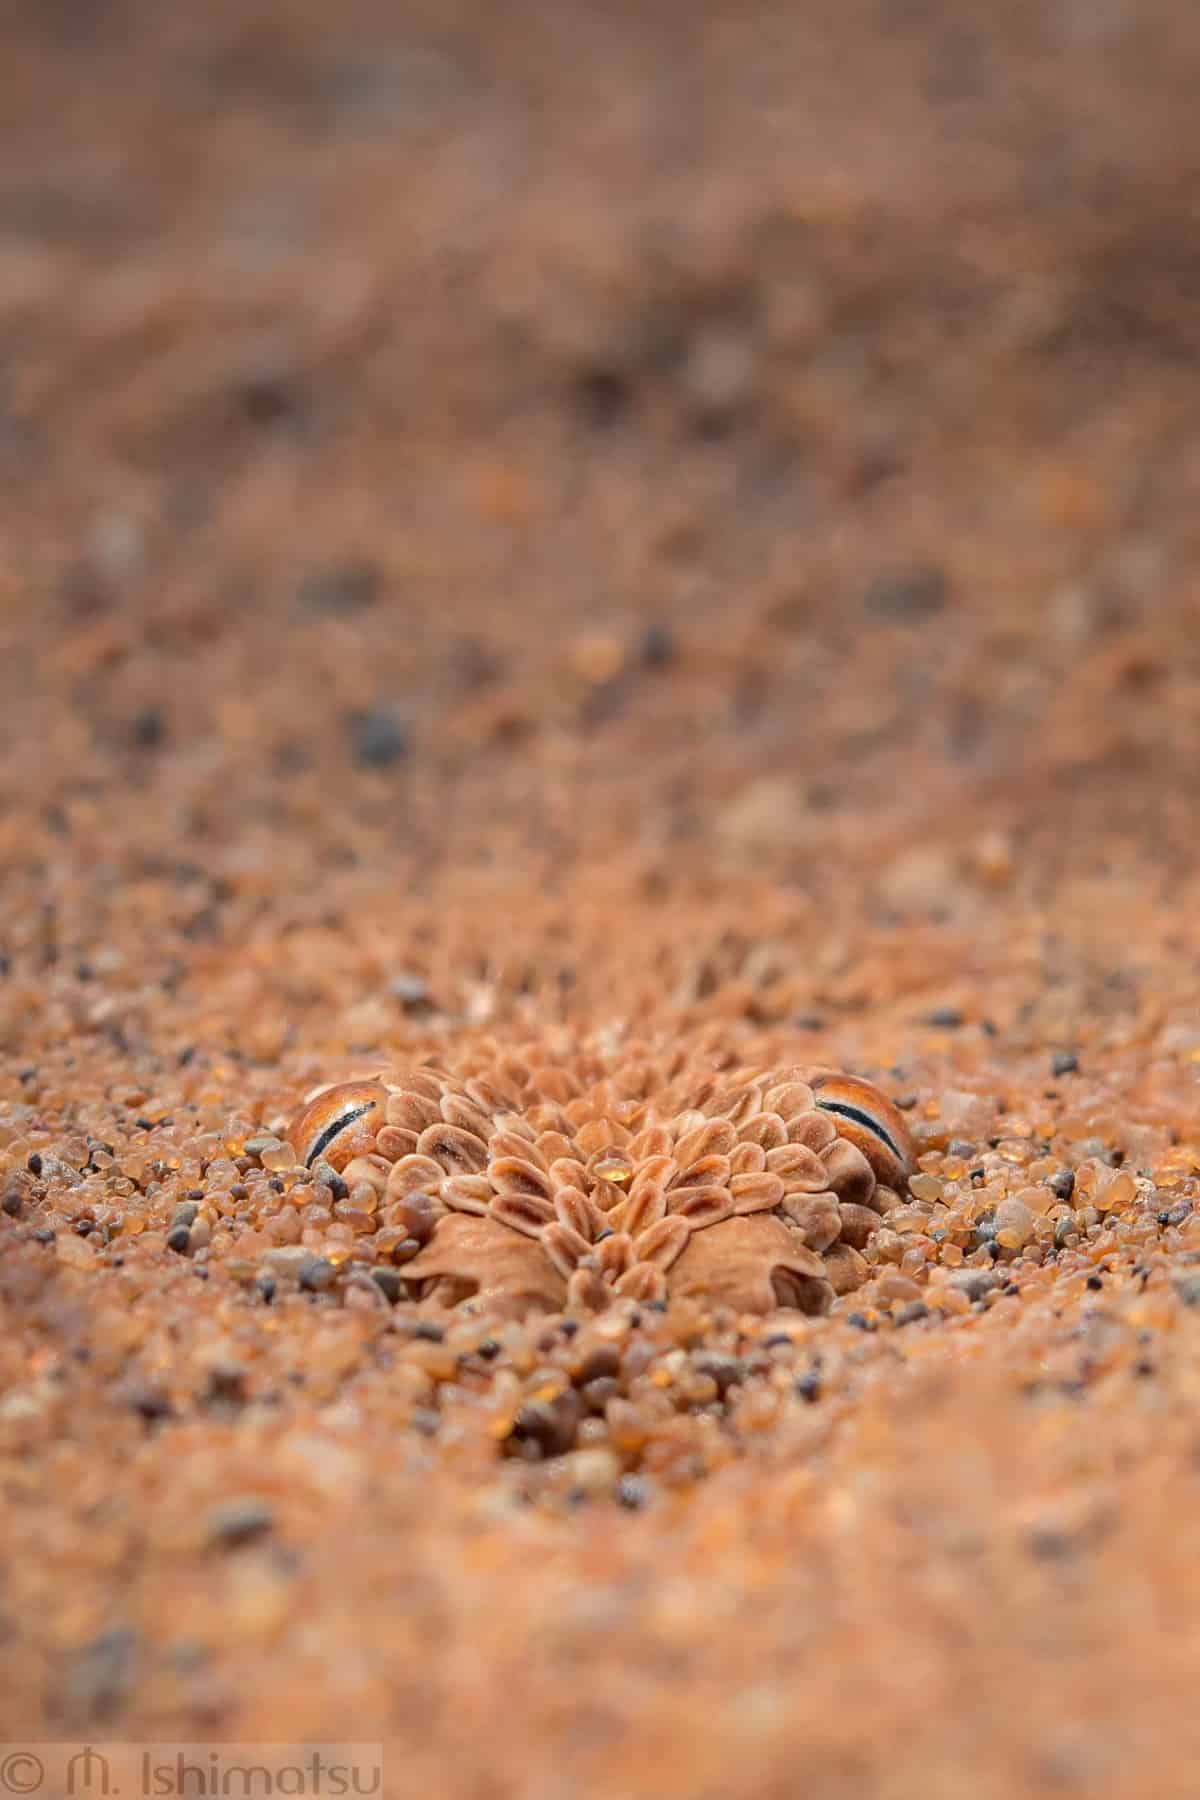 Peringuey's desert adder hiding in the sand